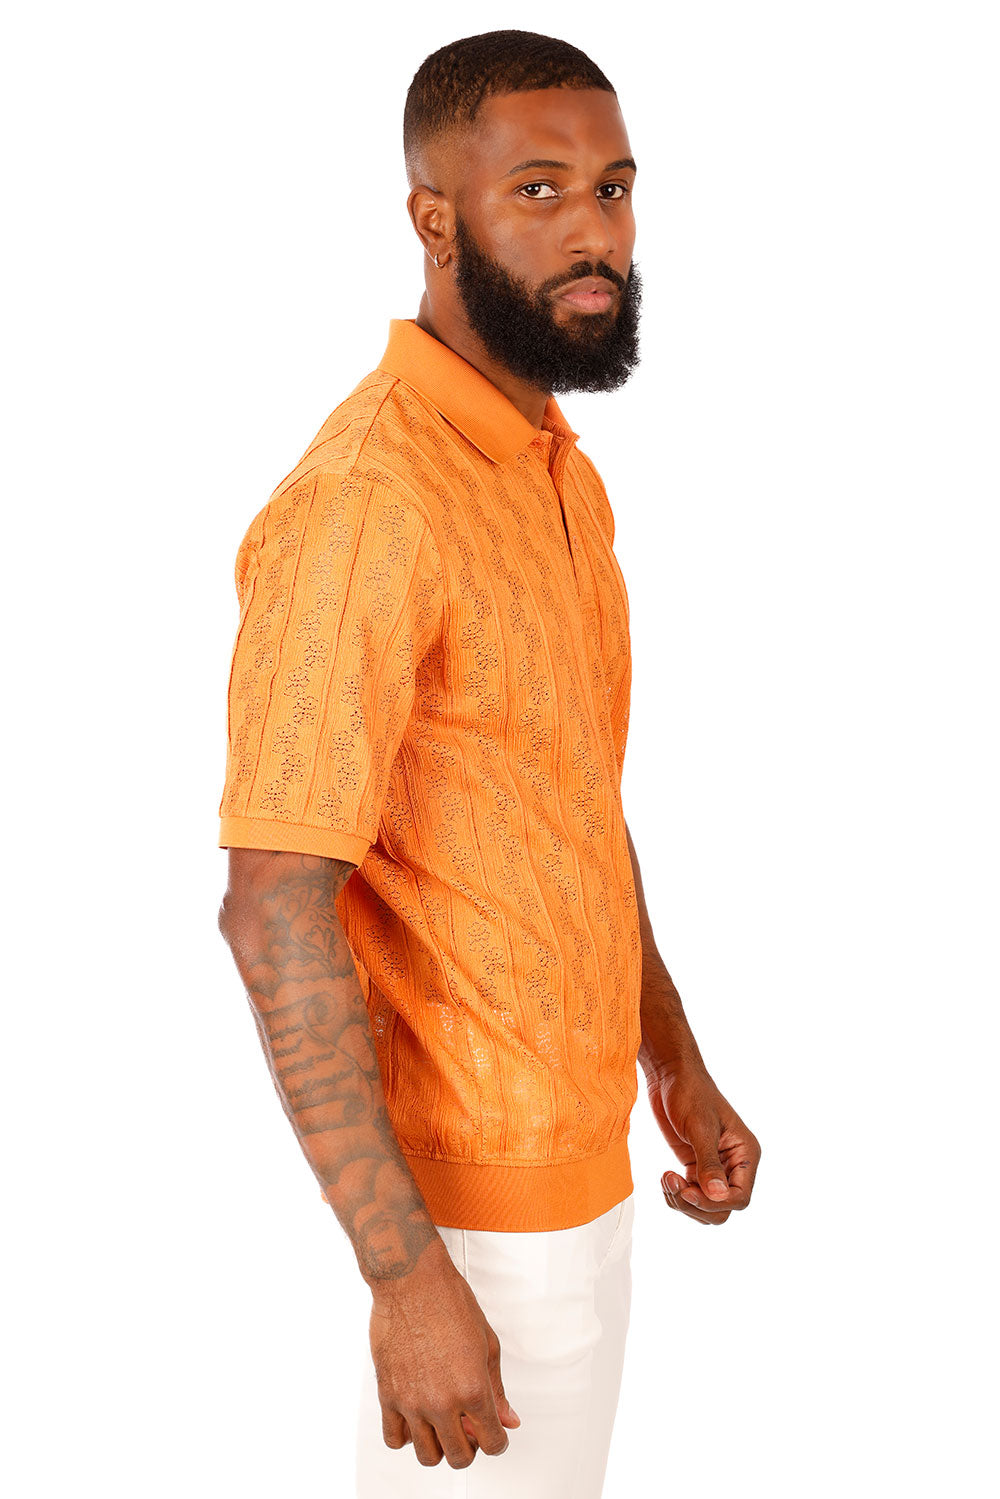 Barabas Men's French Crochet Floral Short Sleeve Polo Shirts 3P18 Orange